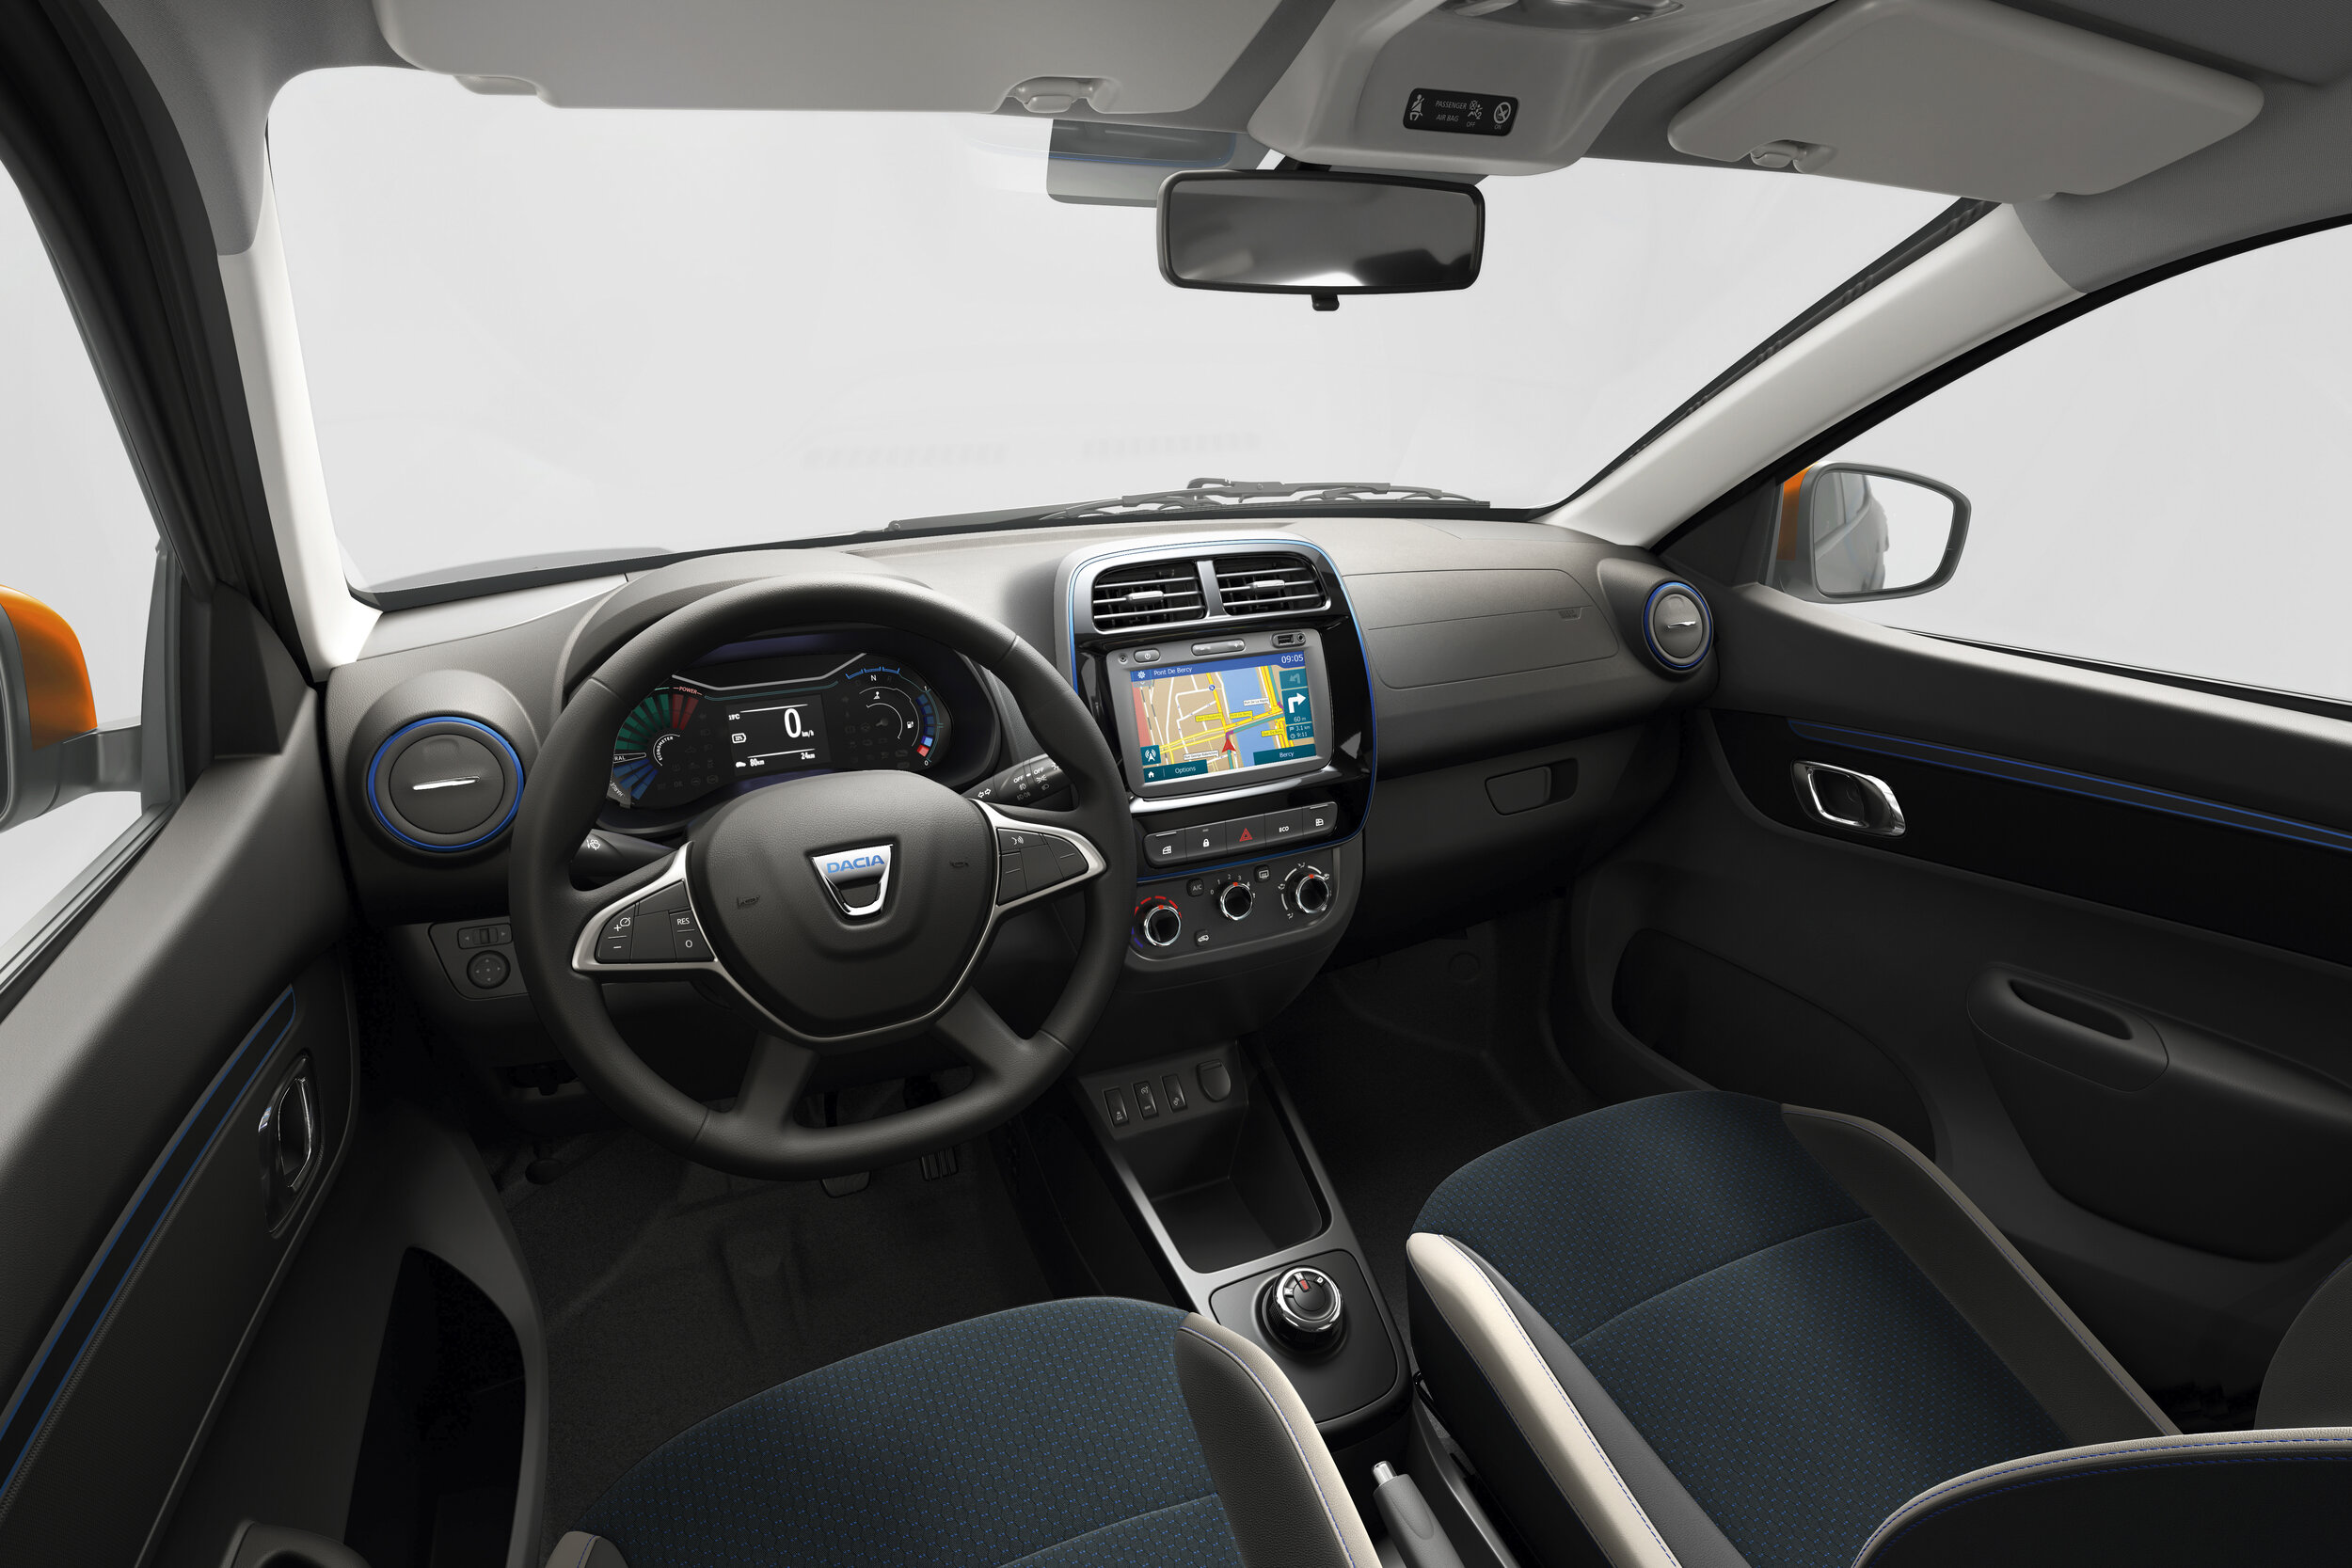 2020 - Dacia SPRING (18).jpg